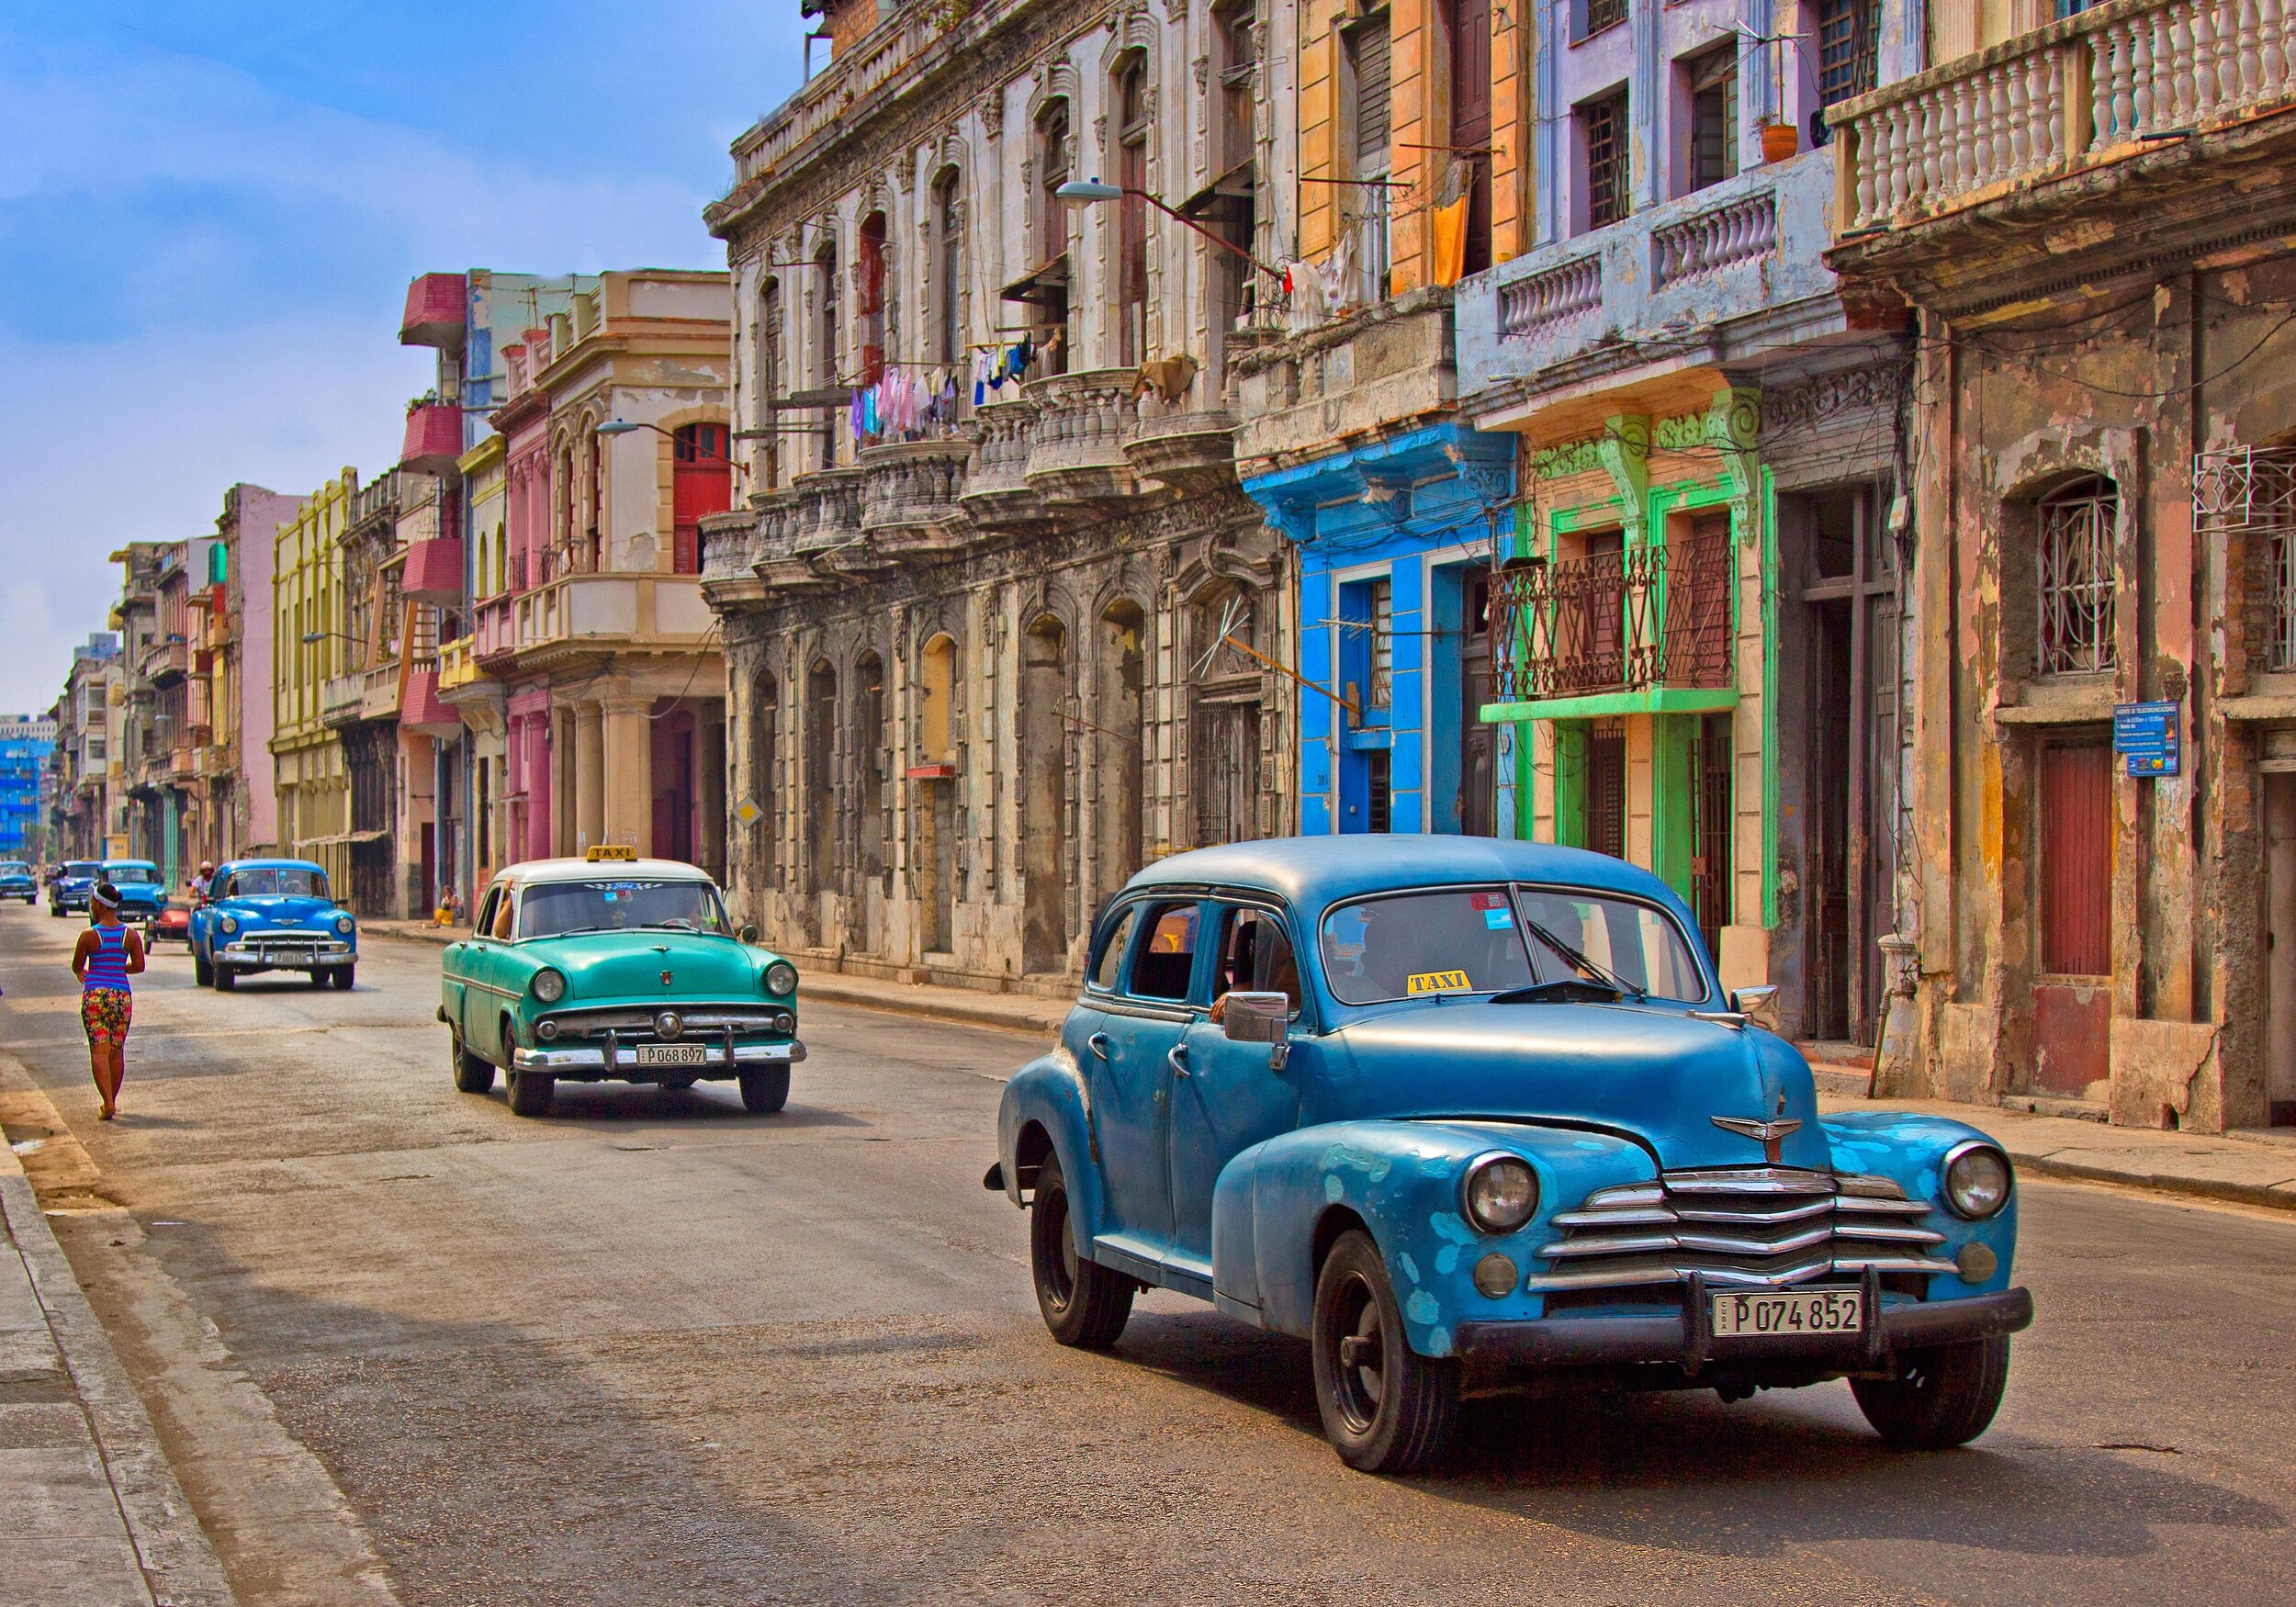  Old Havana, Cuba         